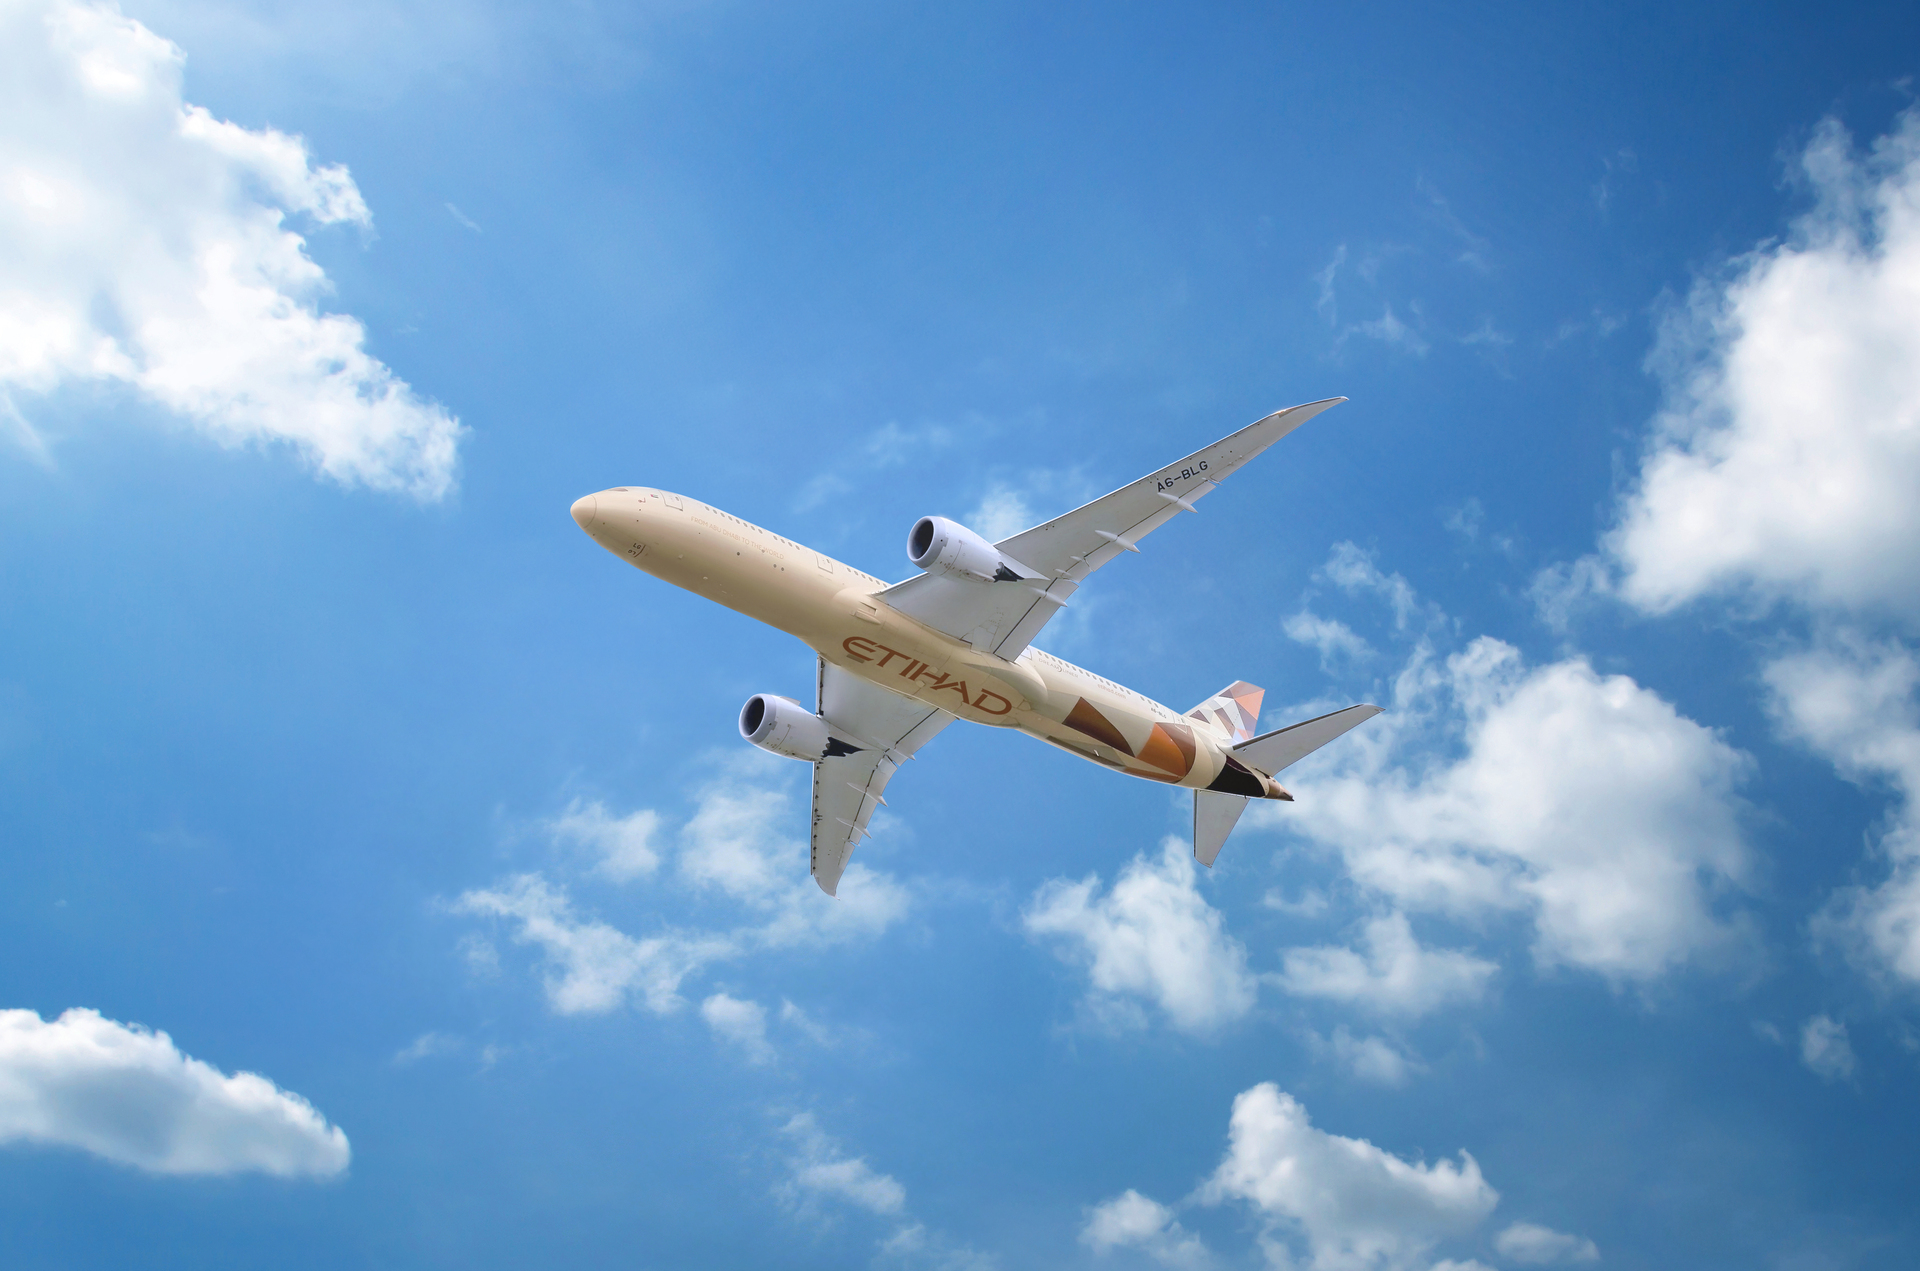 Etihad Airways Travel Advice For Half-Term Break